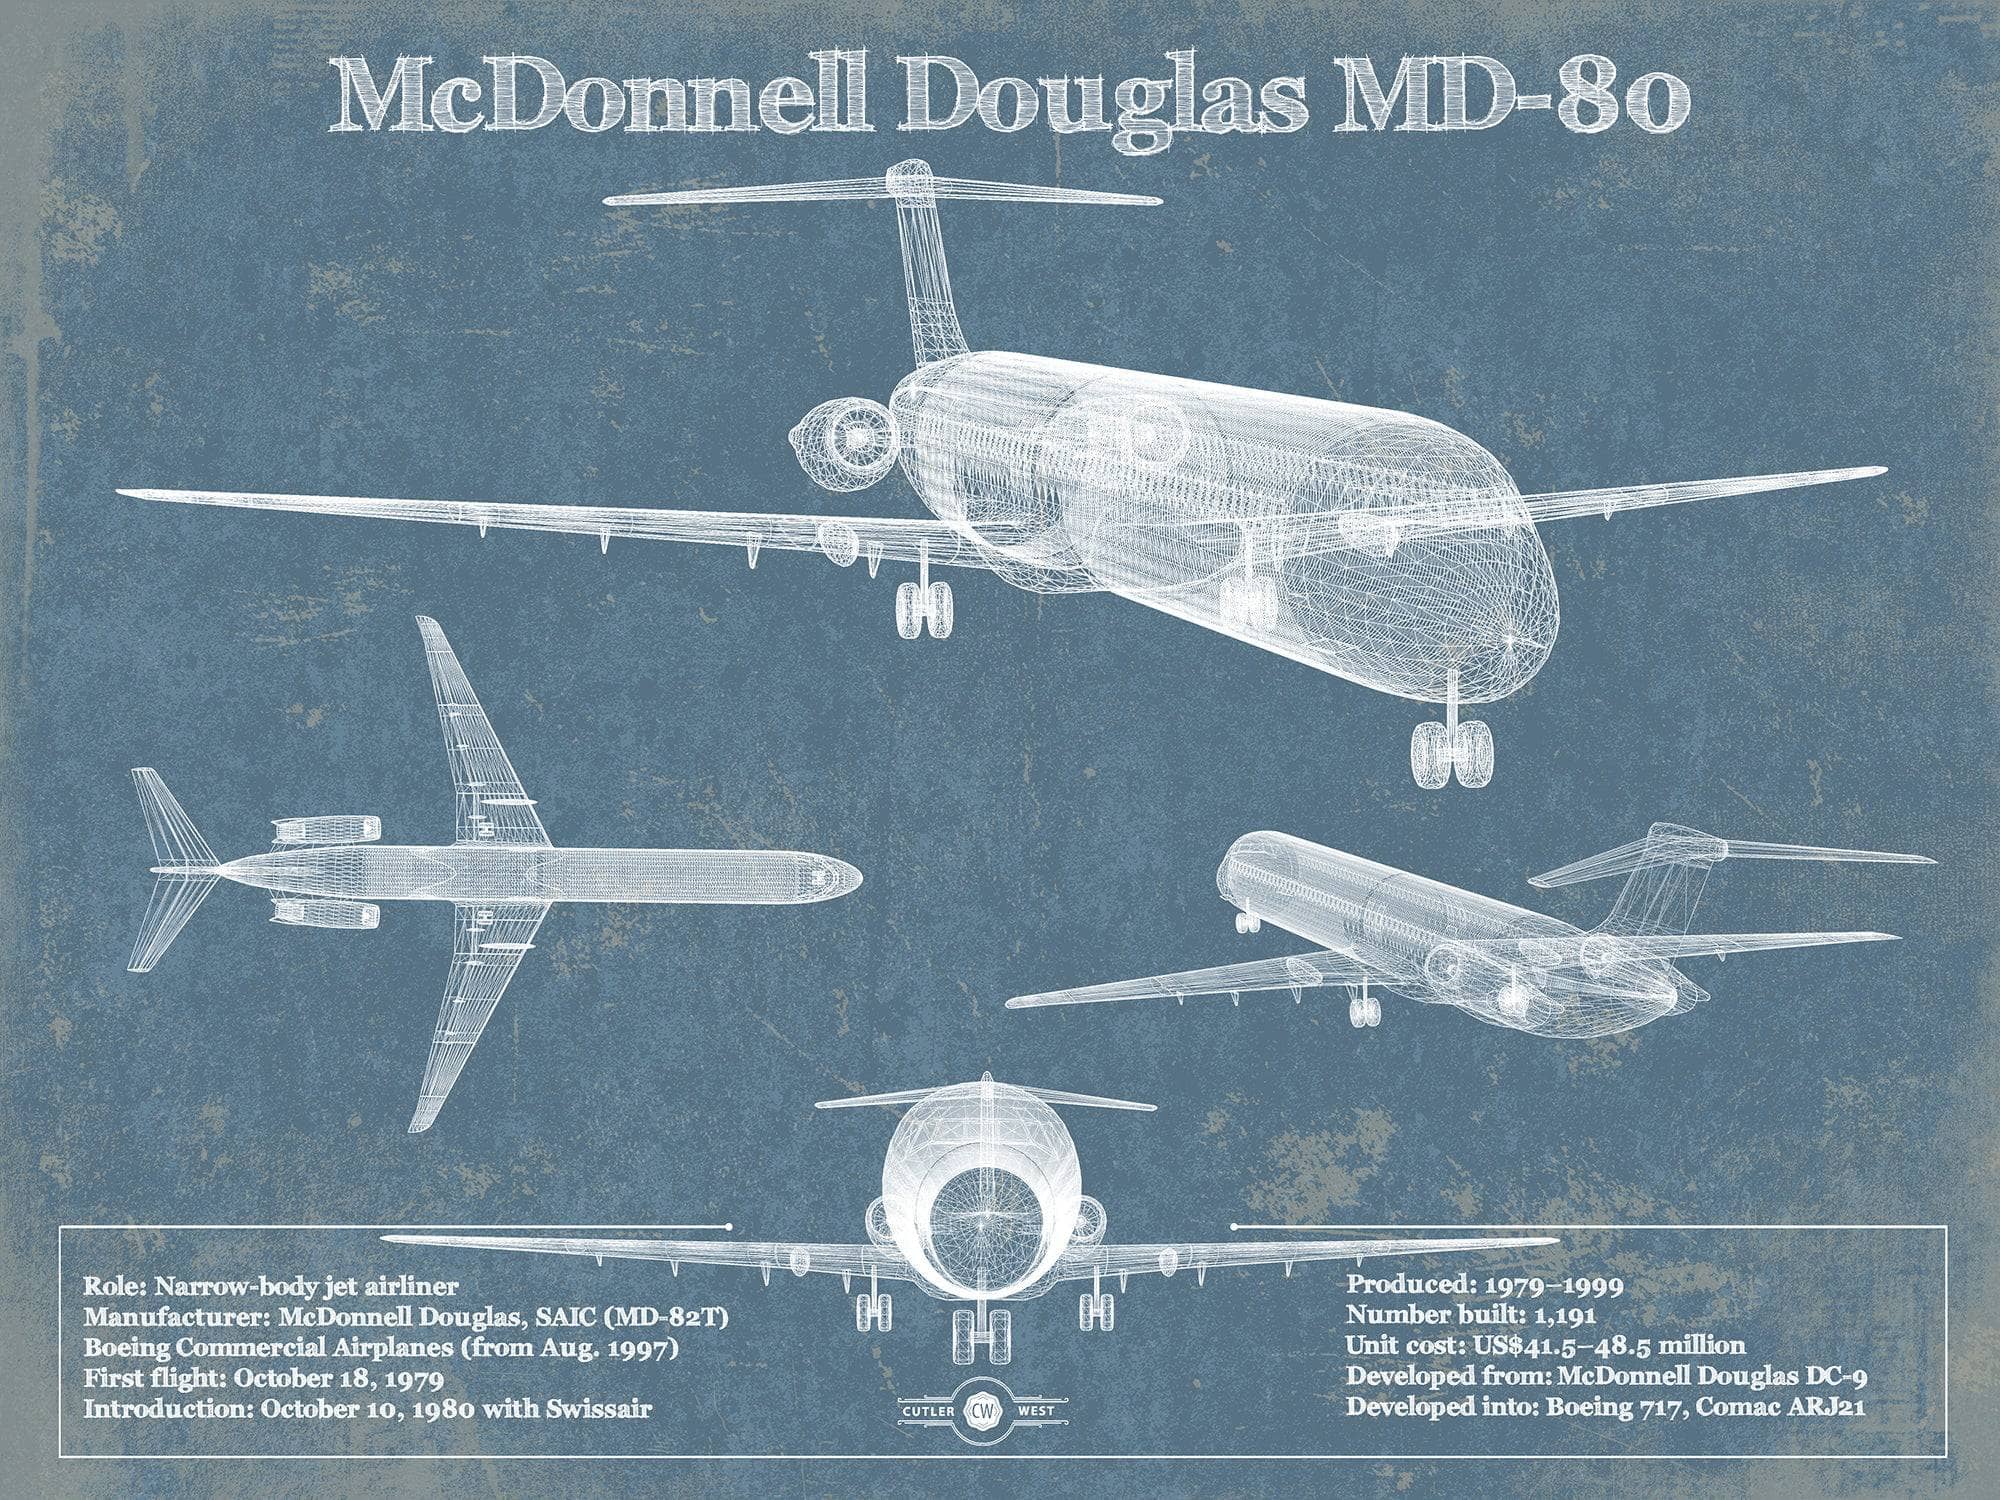 Cutler West McDonnell Douglas Collection 14" x 11" / Unframed McDonnell Douglas MD-80 Vintage Aviation Blueprint Print 883643400_17212